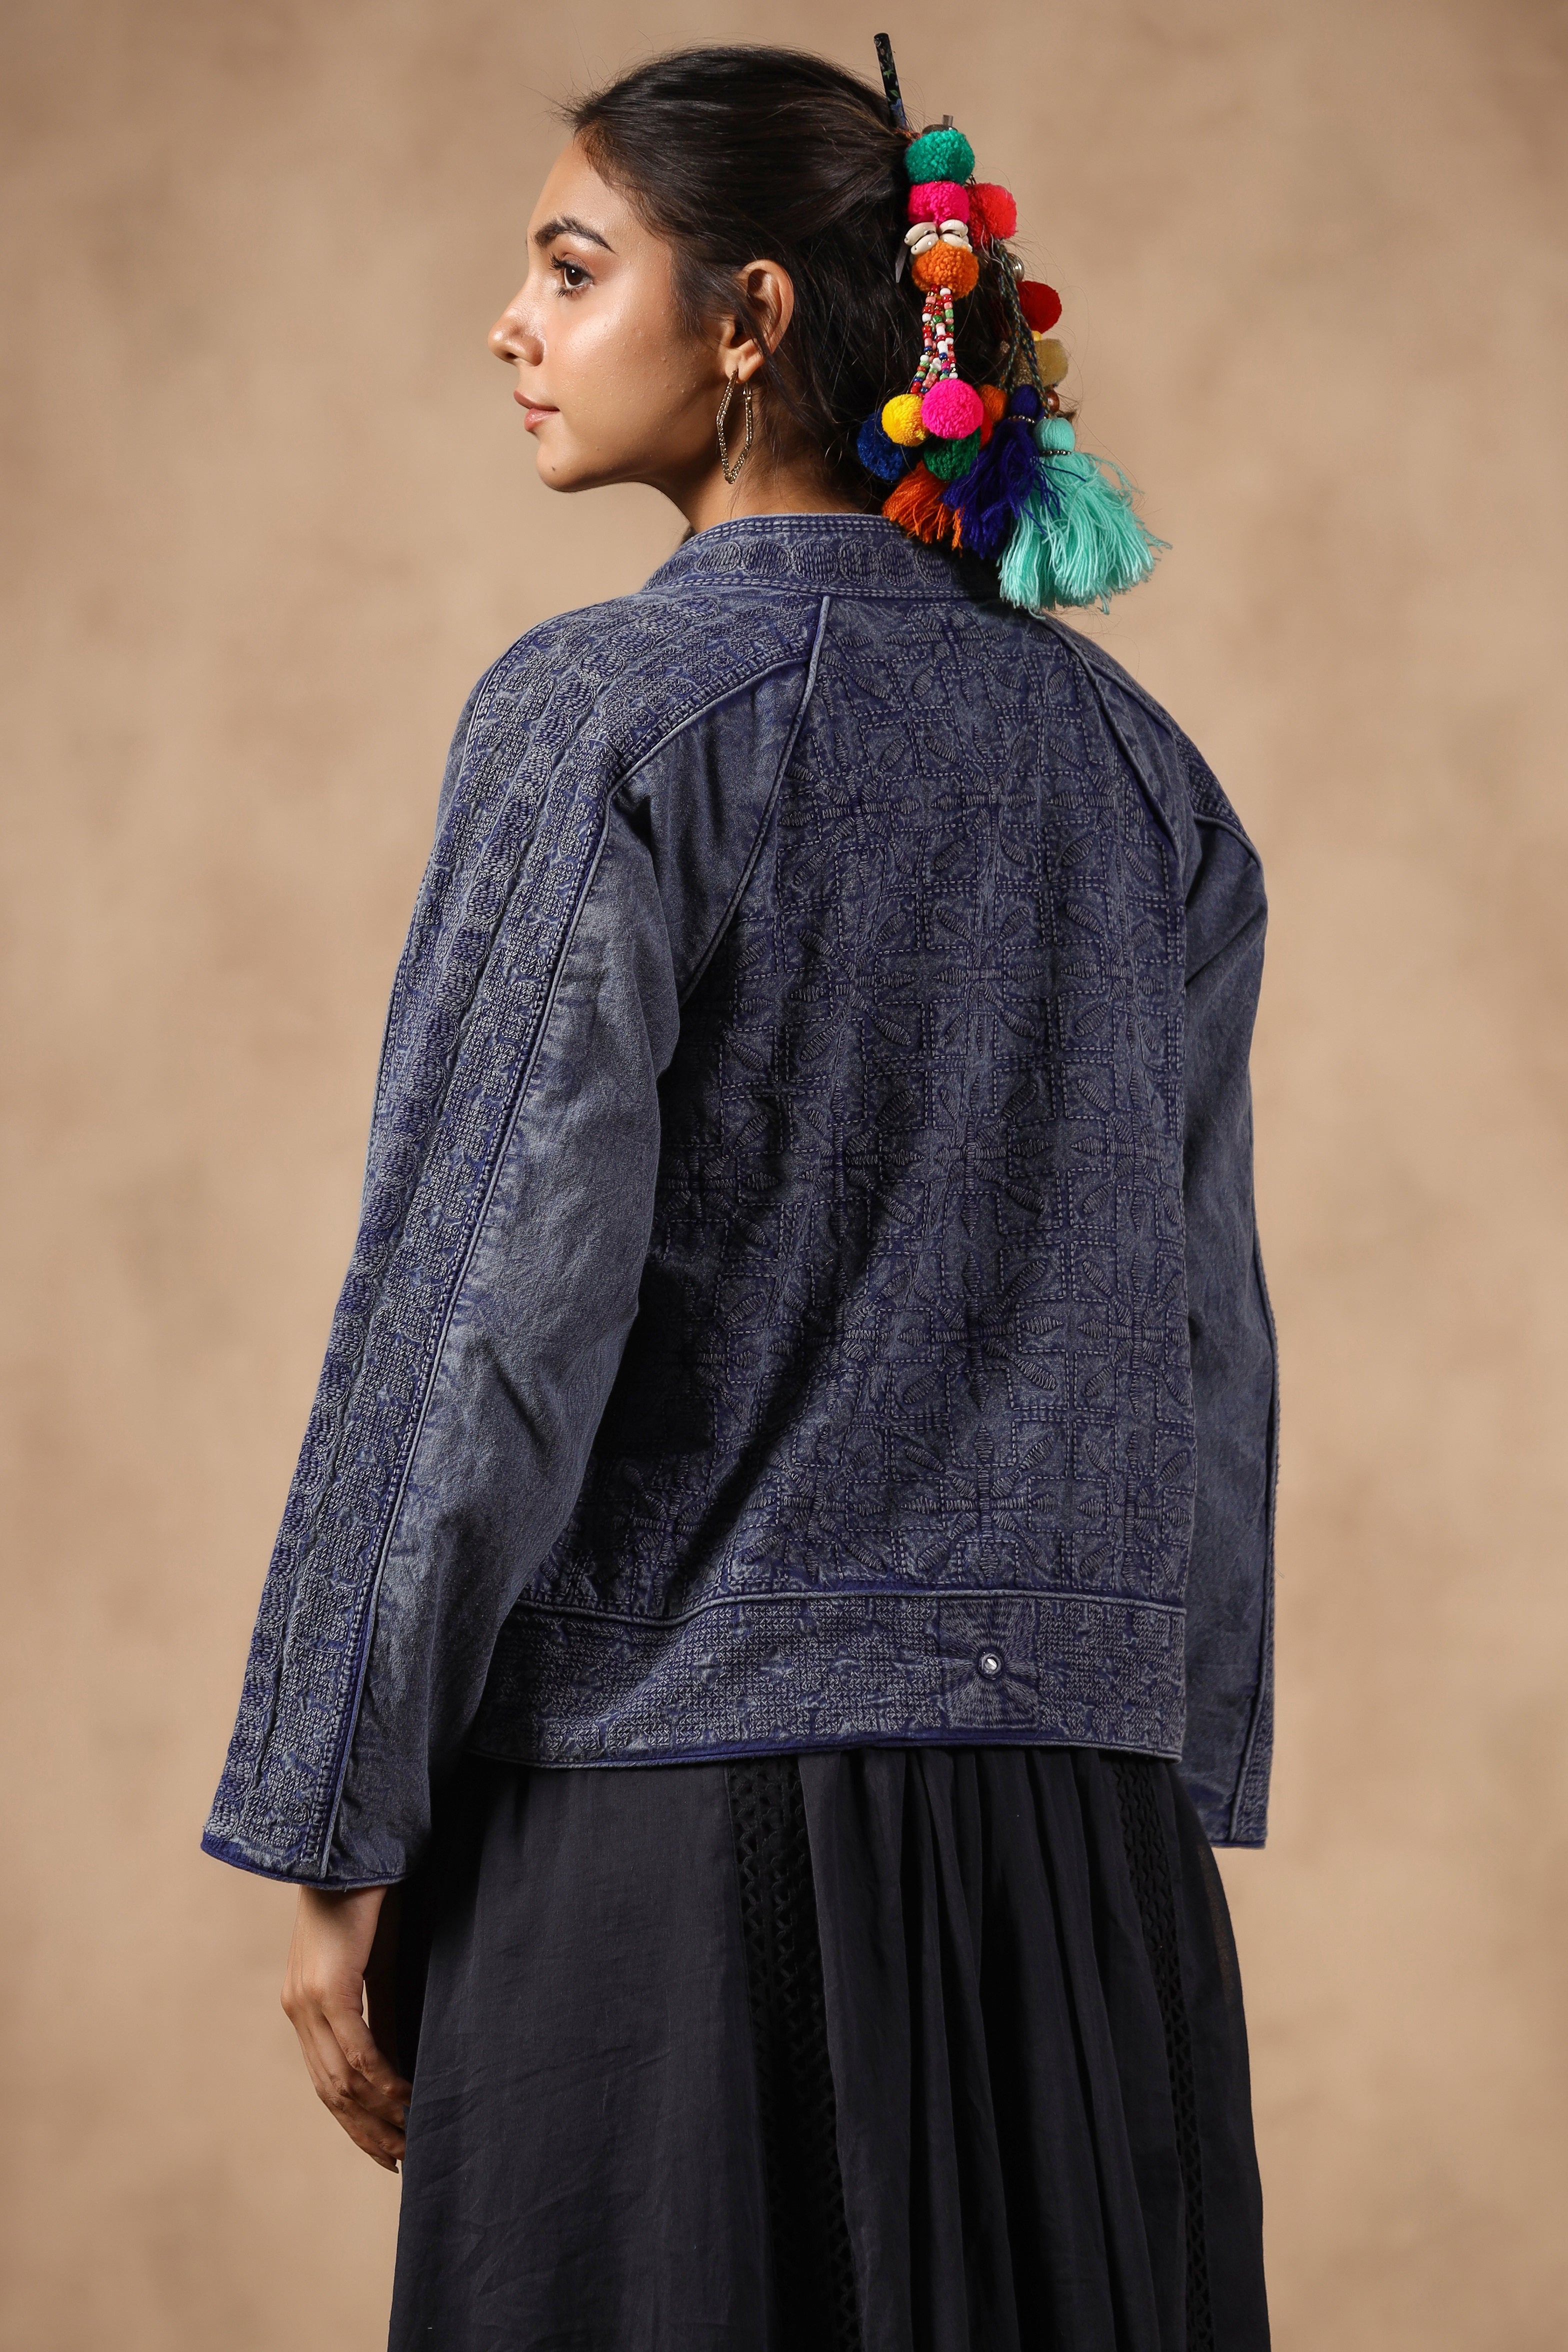 Buy Anouk Navy Mirror Work Ethnic Cotton Jacket - Jackets for Women 1035330  | Myntra